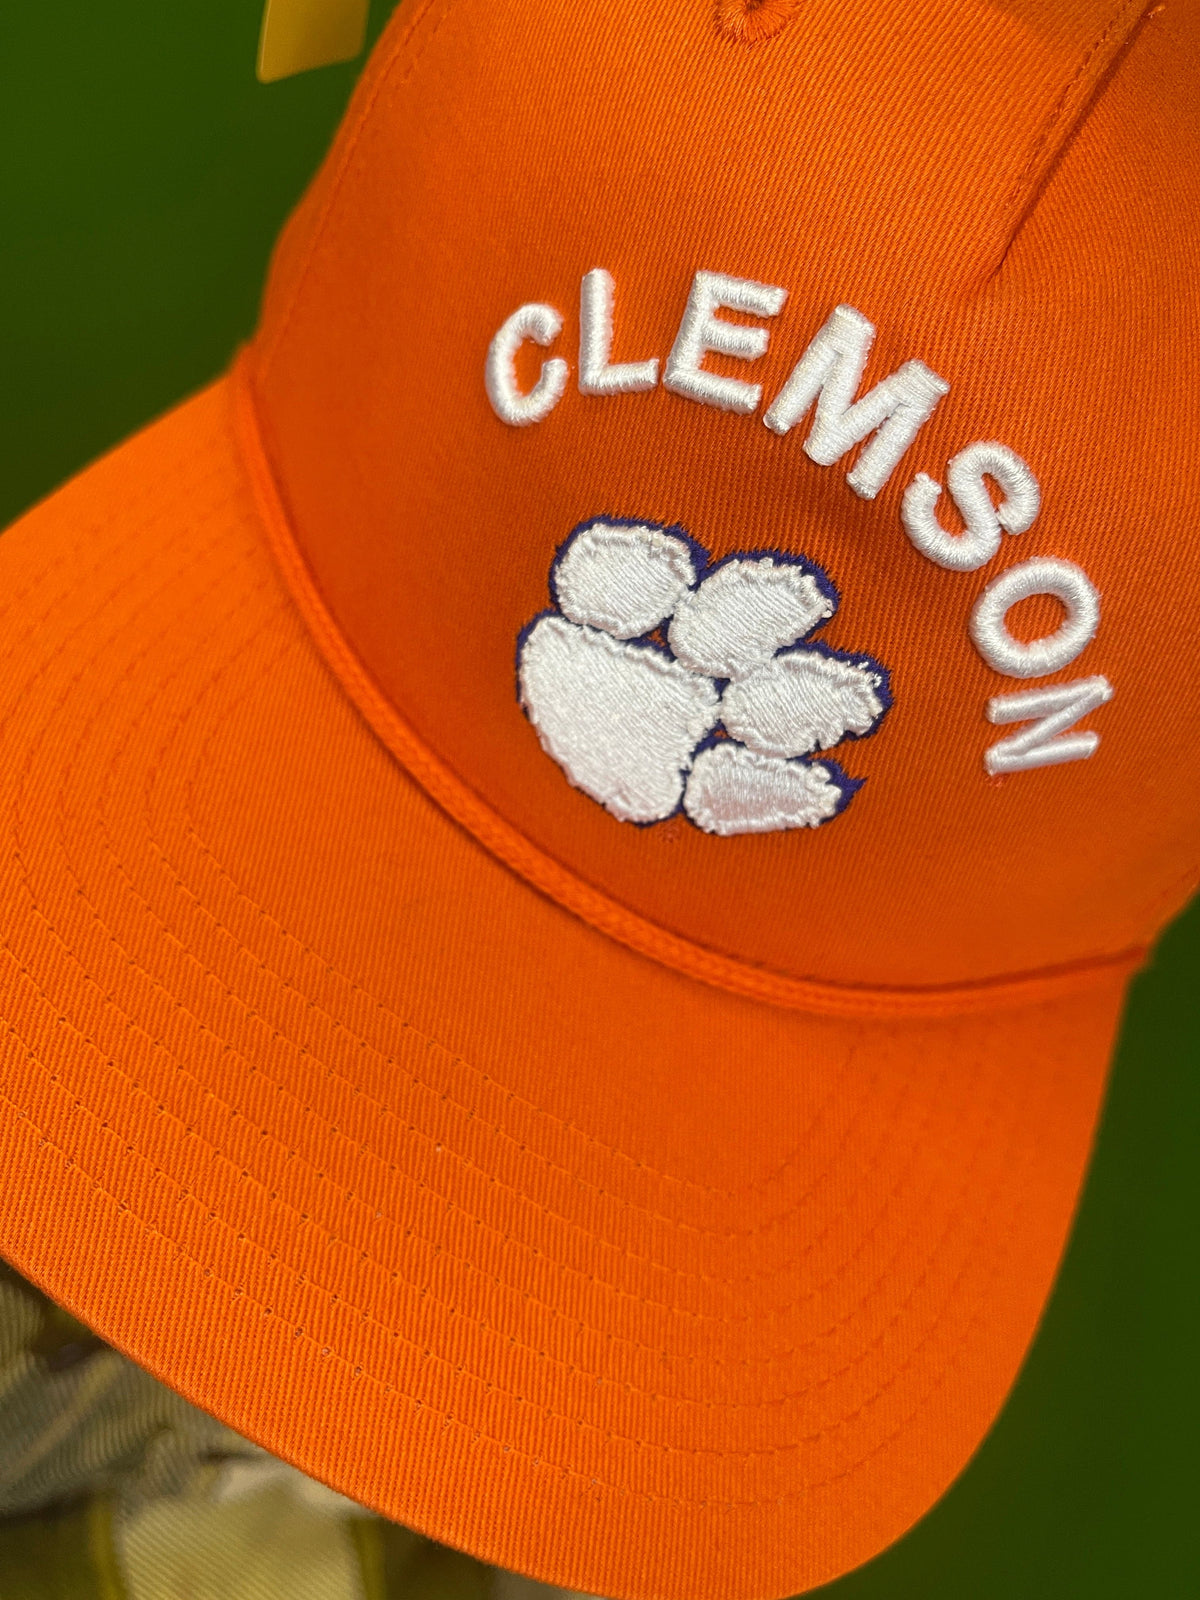 NCAA Clemson Tigers Zephyr Orange 100% Cotton Snapback Hat/Cap OSFM NWT